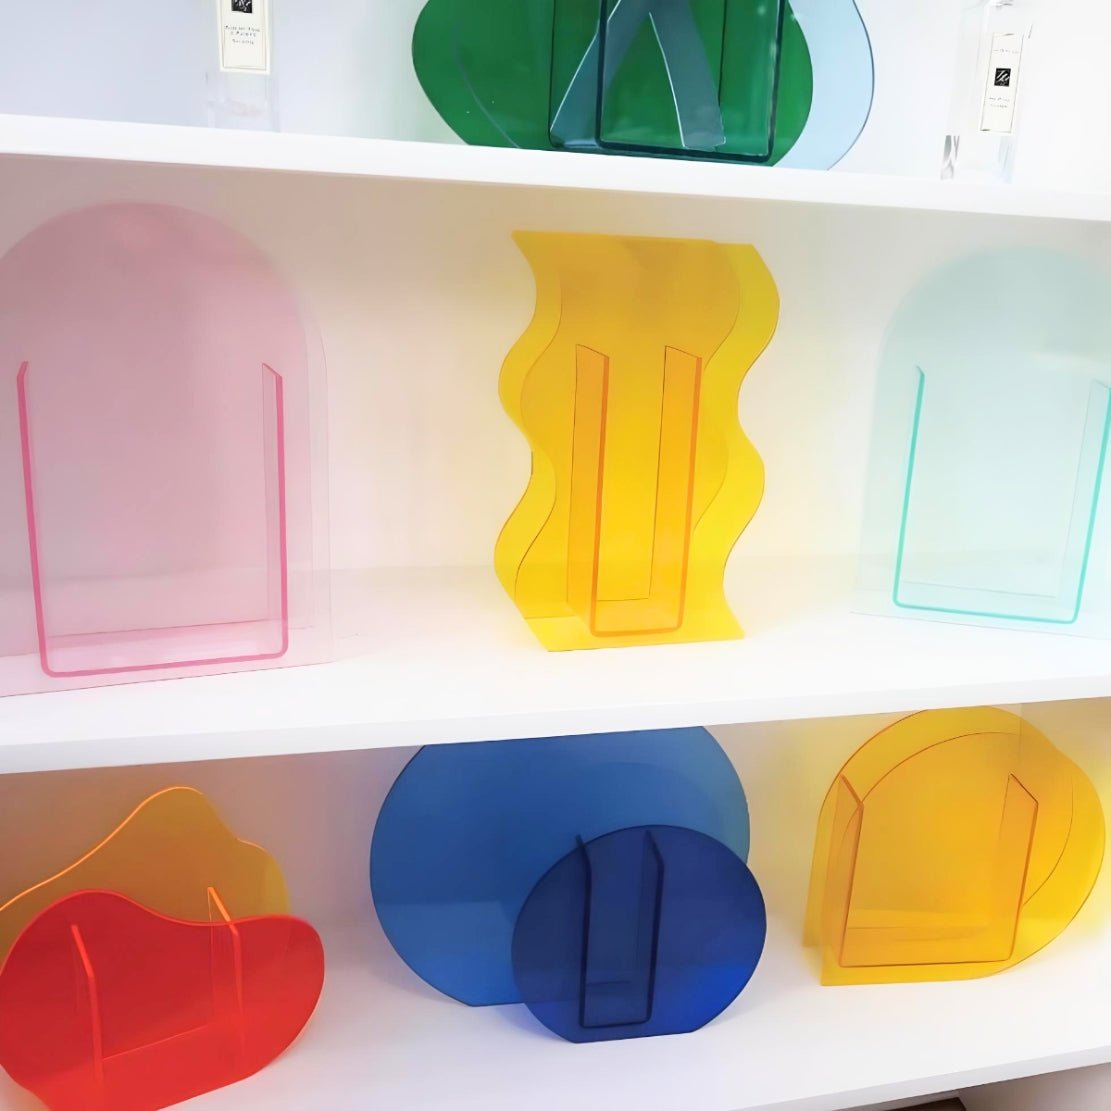 Geometric, colourful acrylic vases